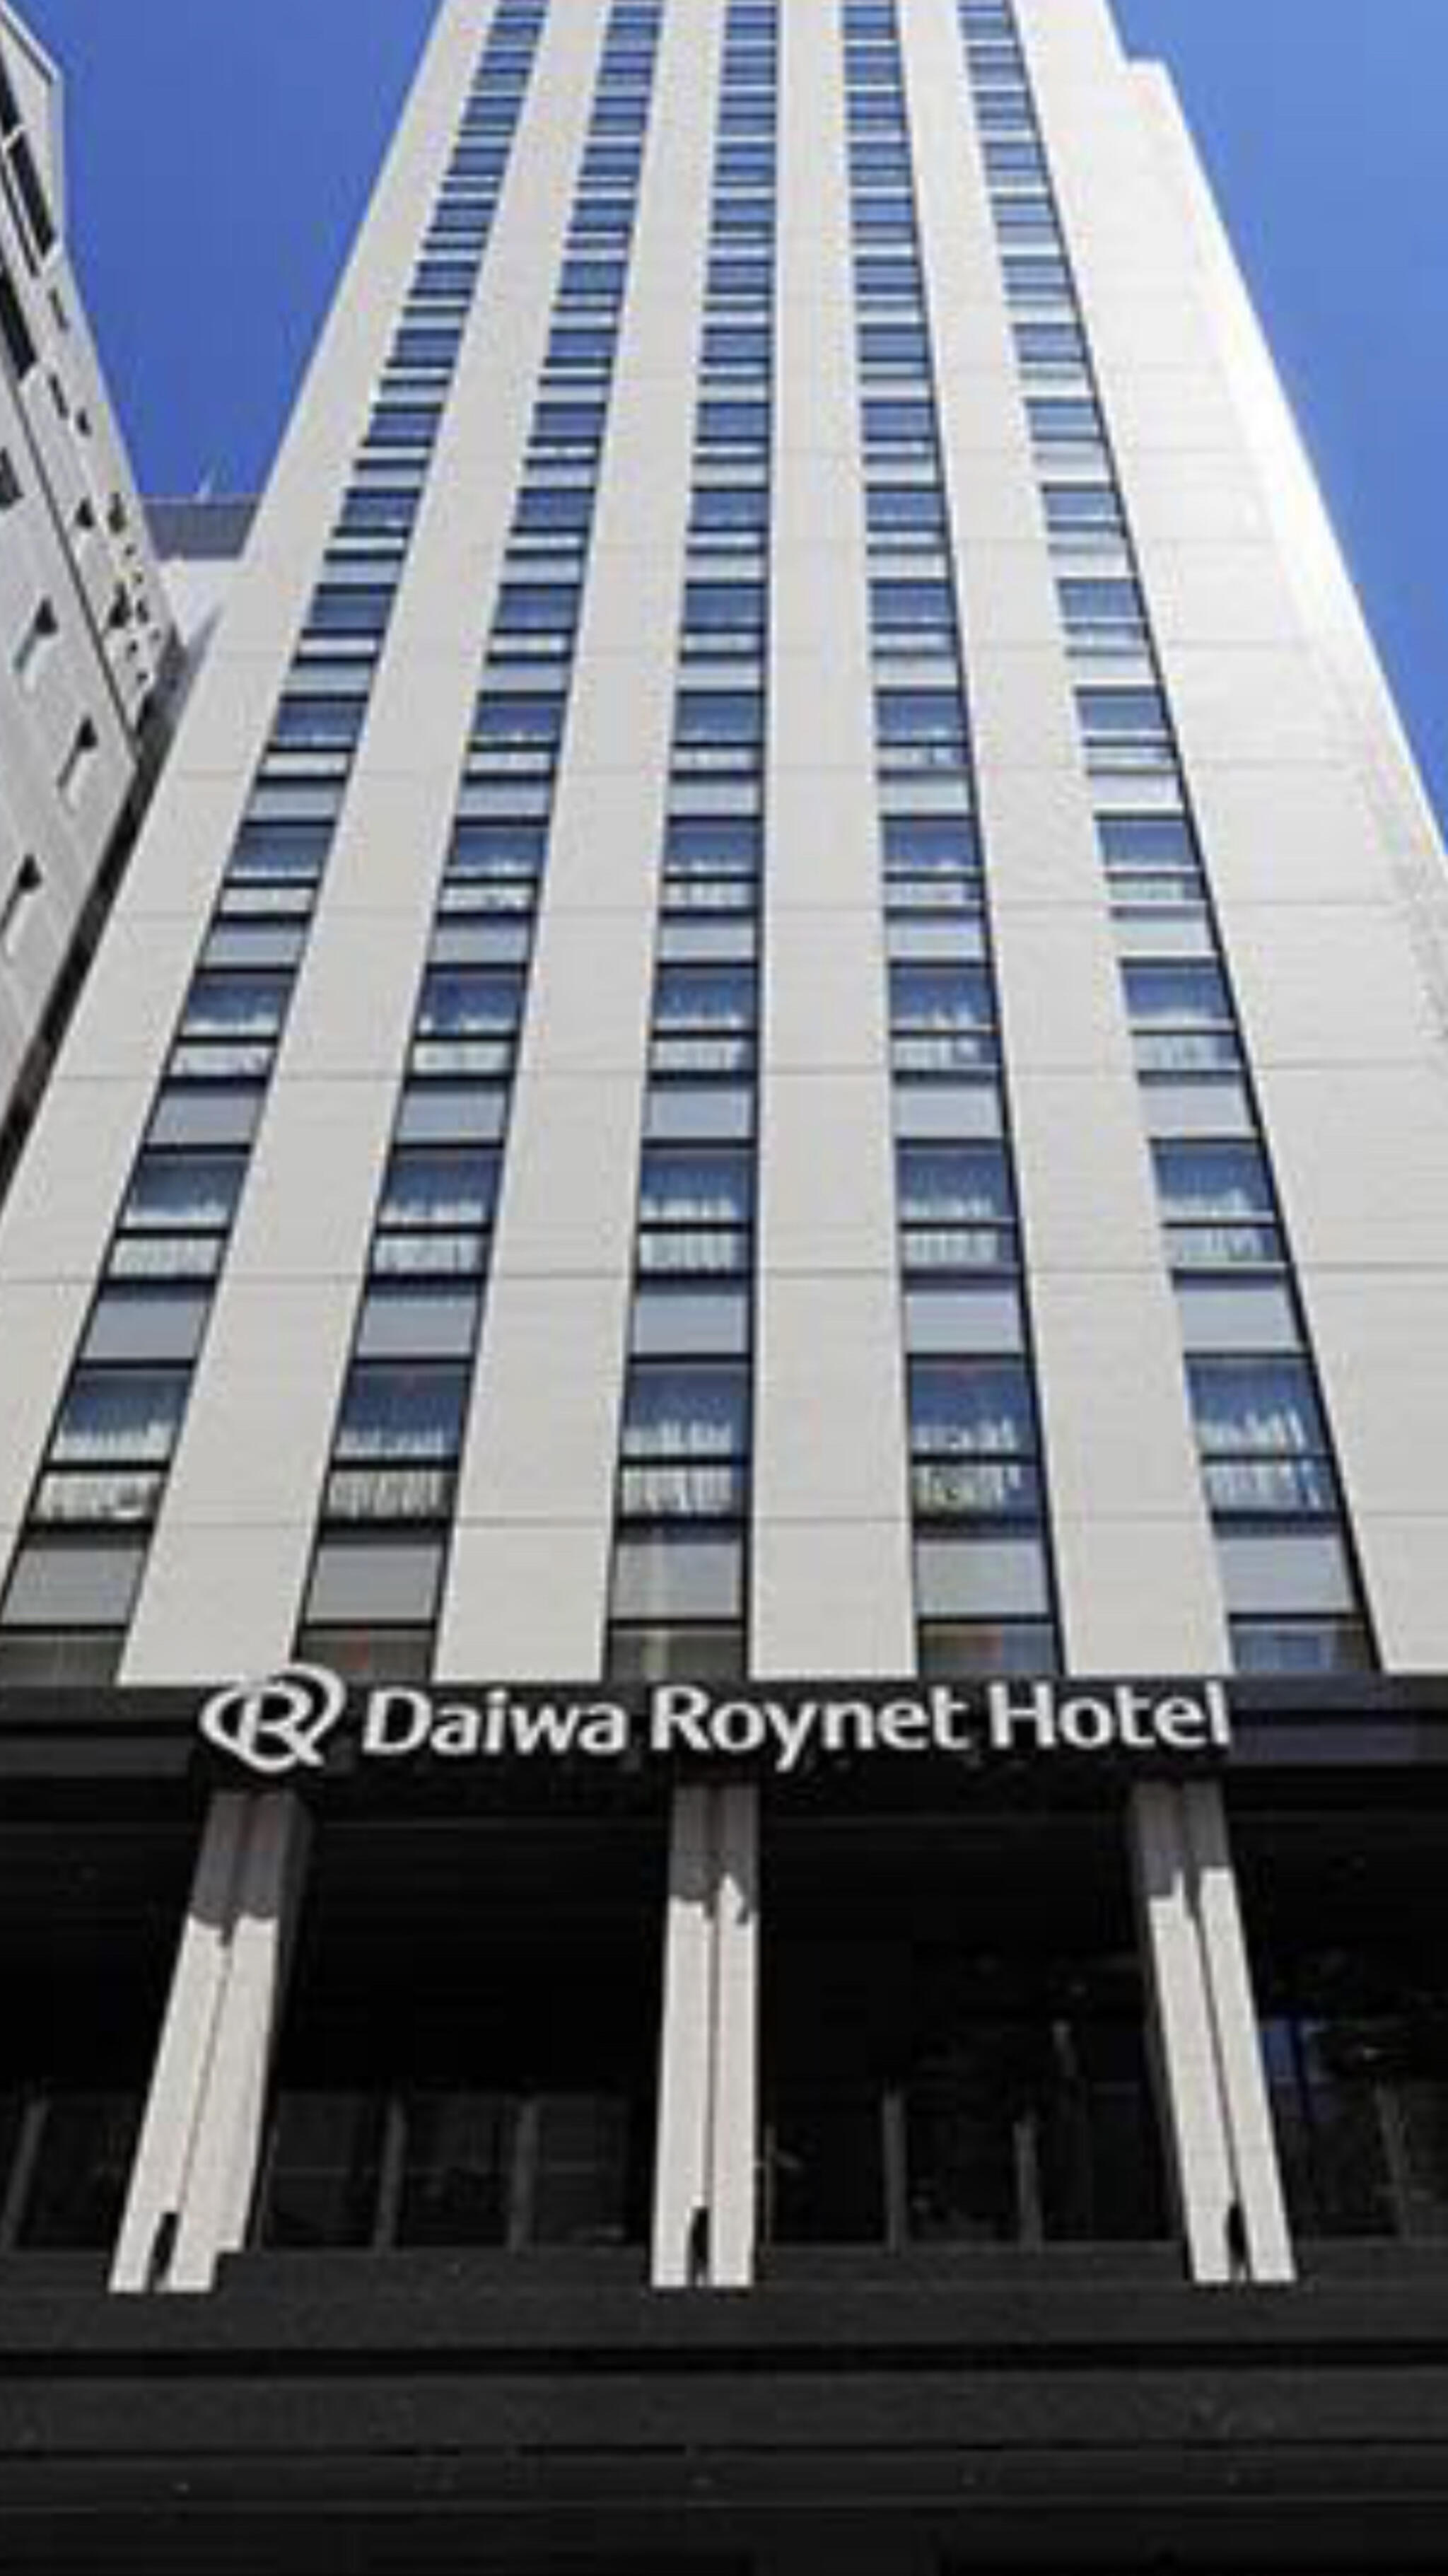 DEL style 大阪心斎橋 by Daiwa Roynet Hotelの代表写真10